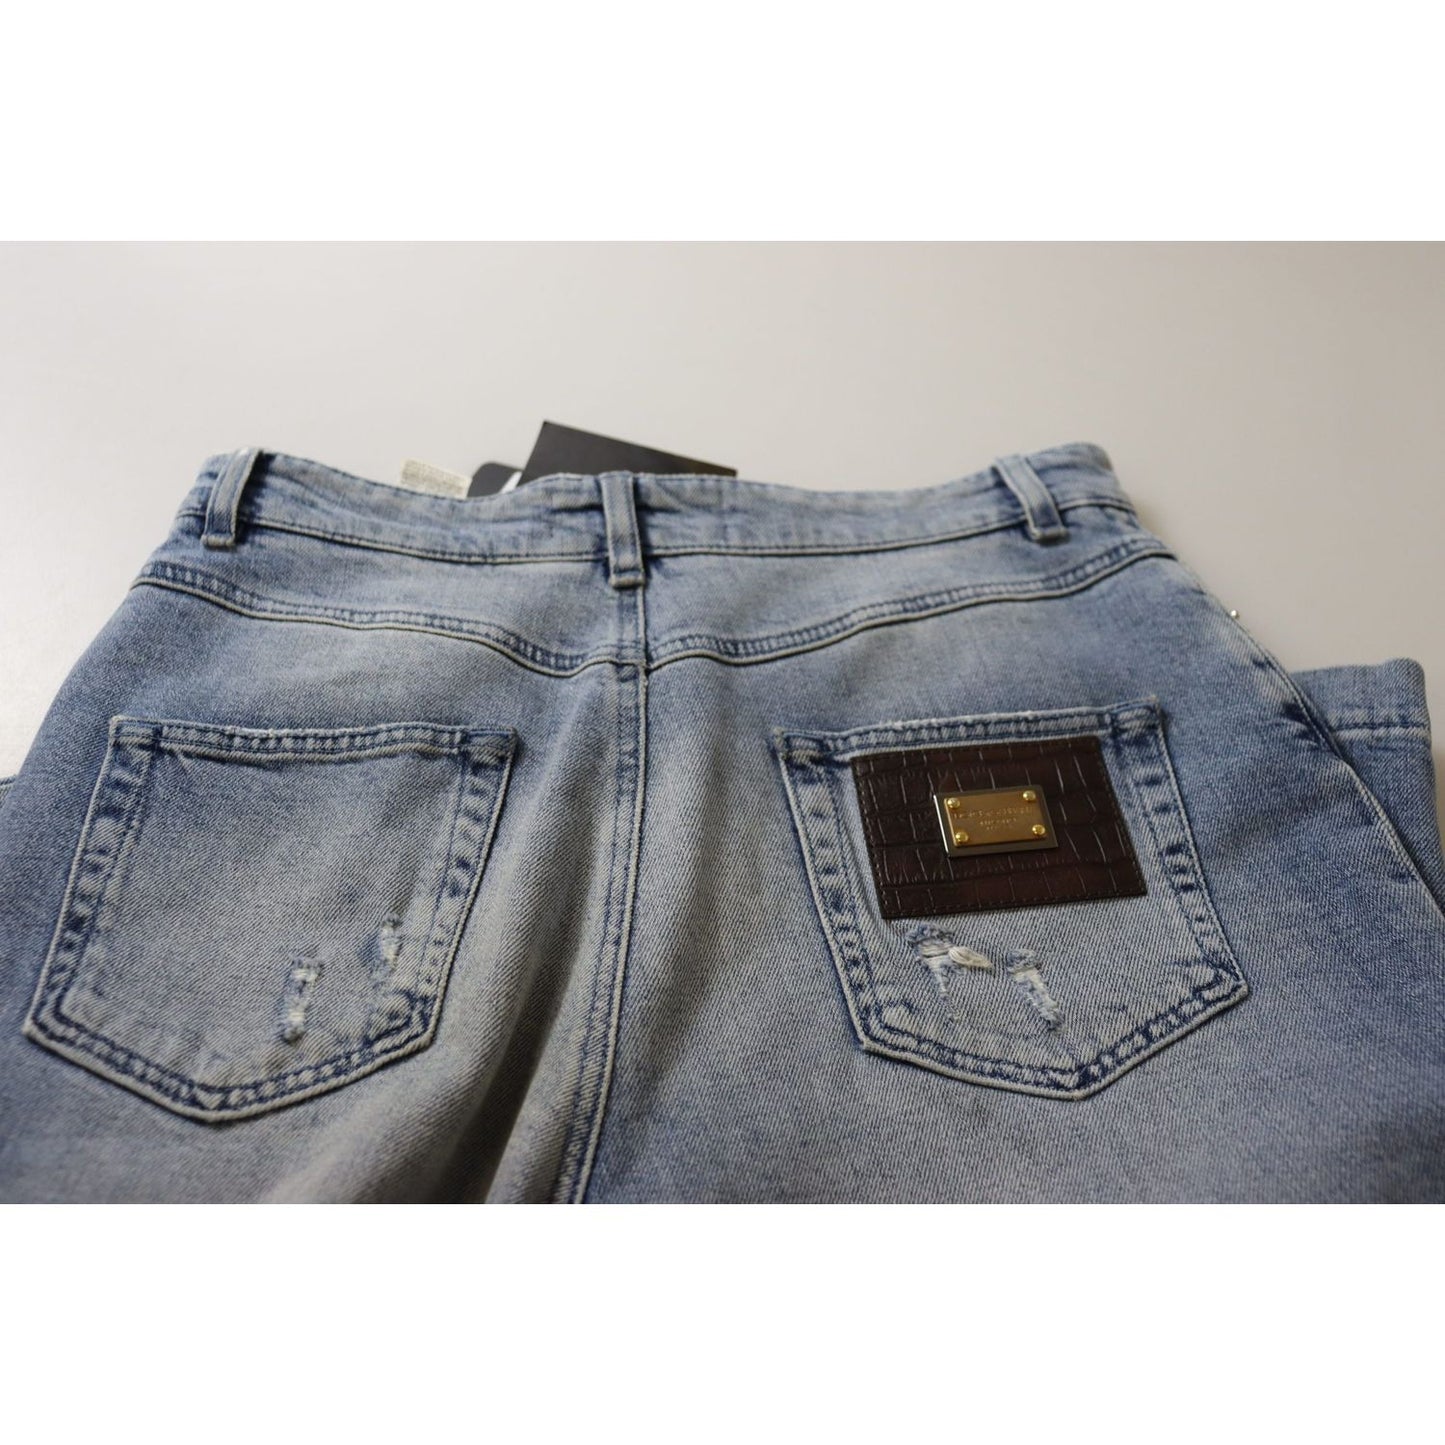 Dolce & GabbanaHigh Waist Skinny Denim Jeans - BlueMcRichard Designer Brands£399.00